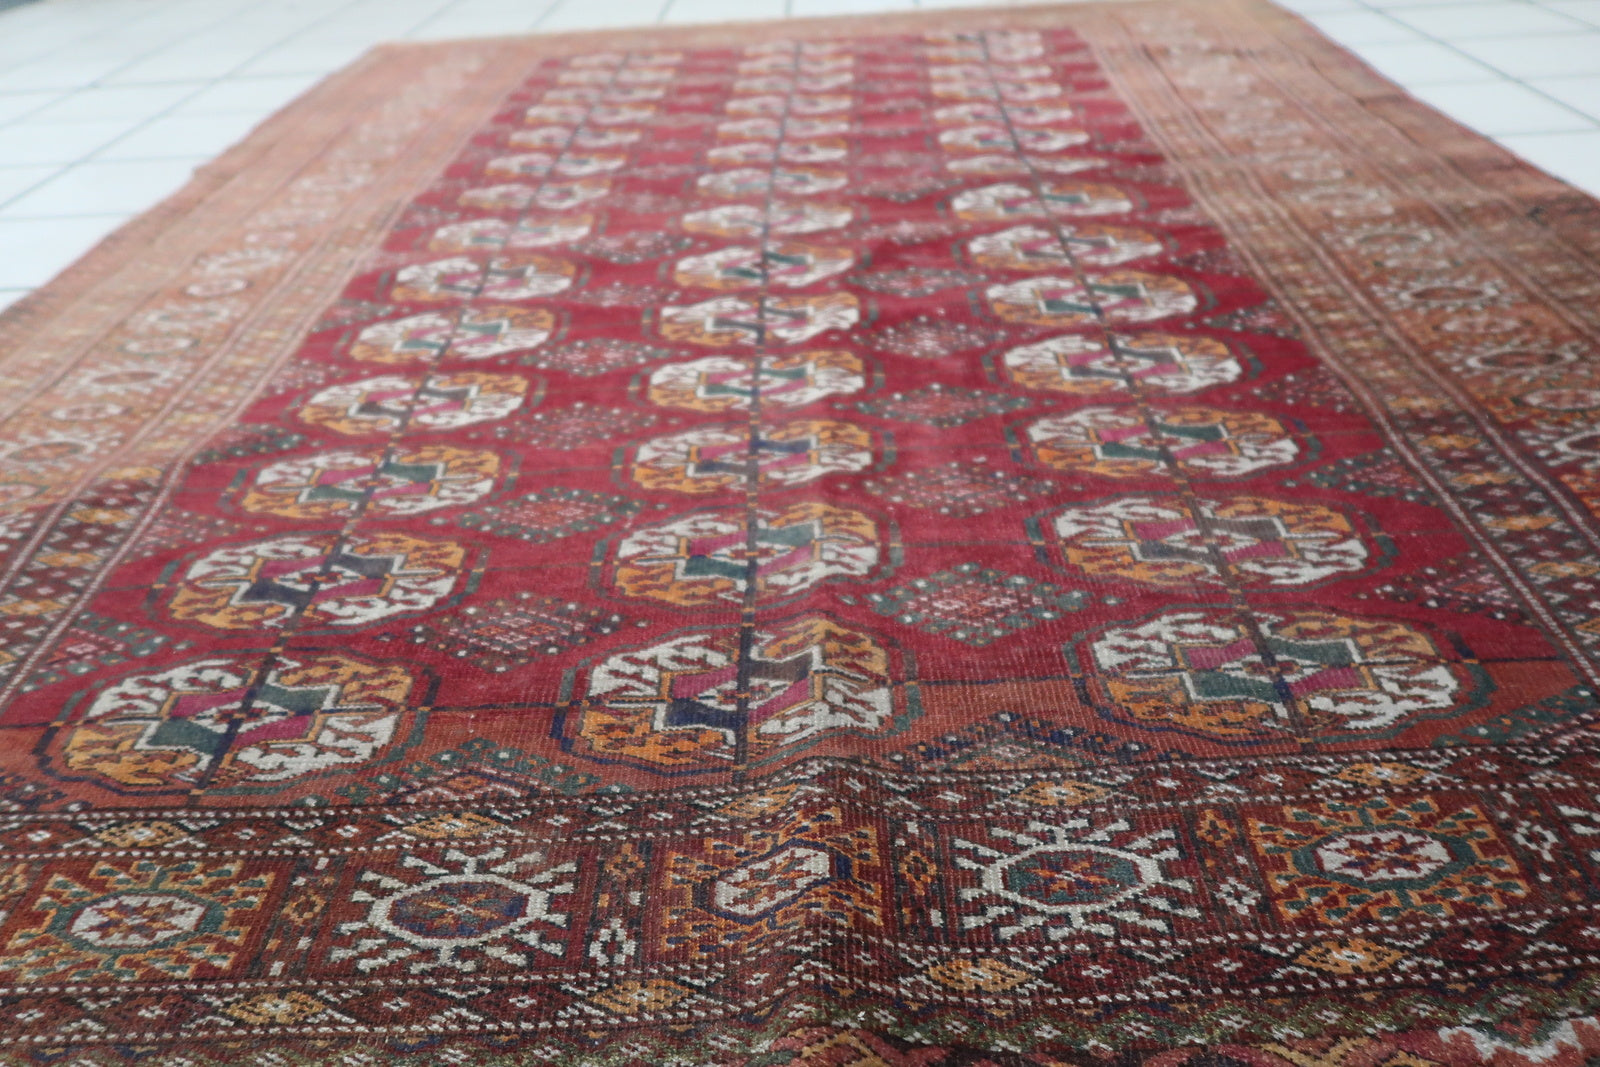 Detailed view of the orange geometric borders on the Handmade Vintage Uzbek Bukhara Rug